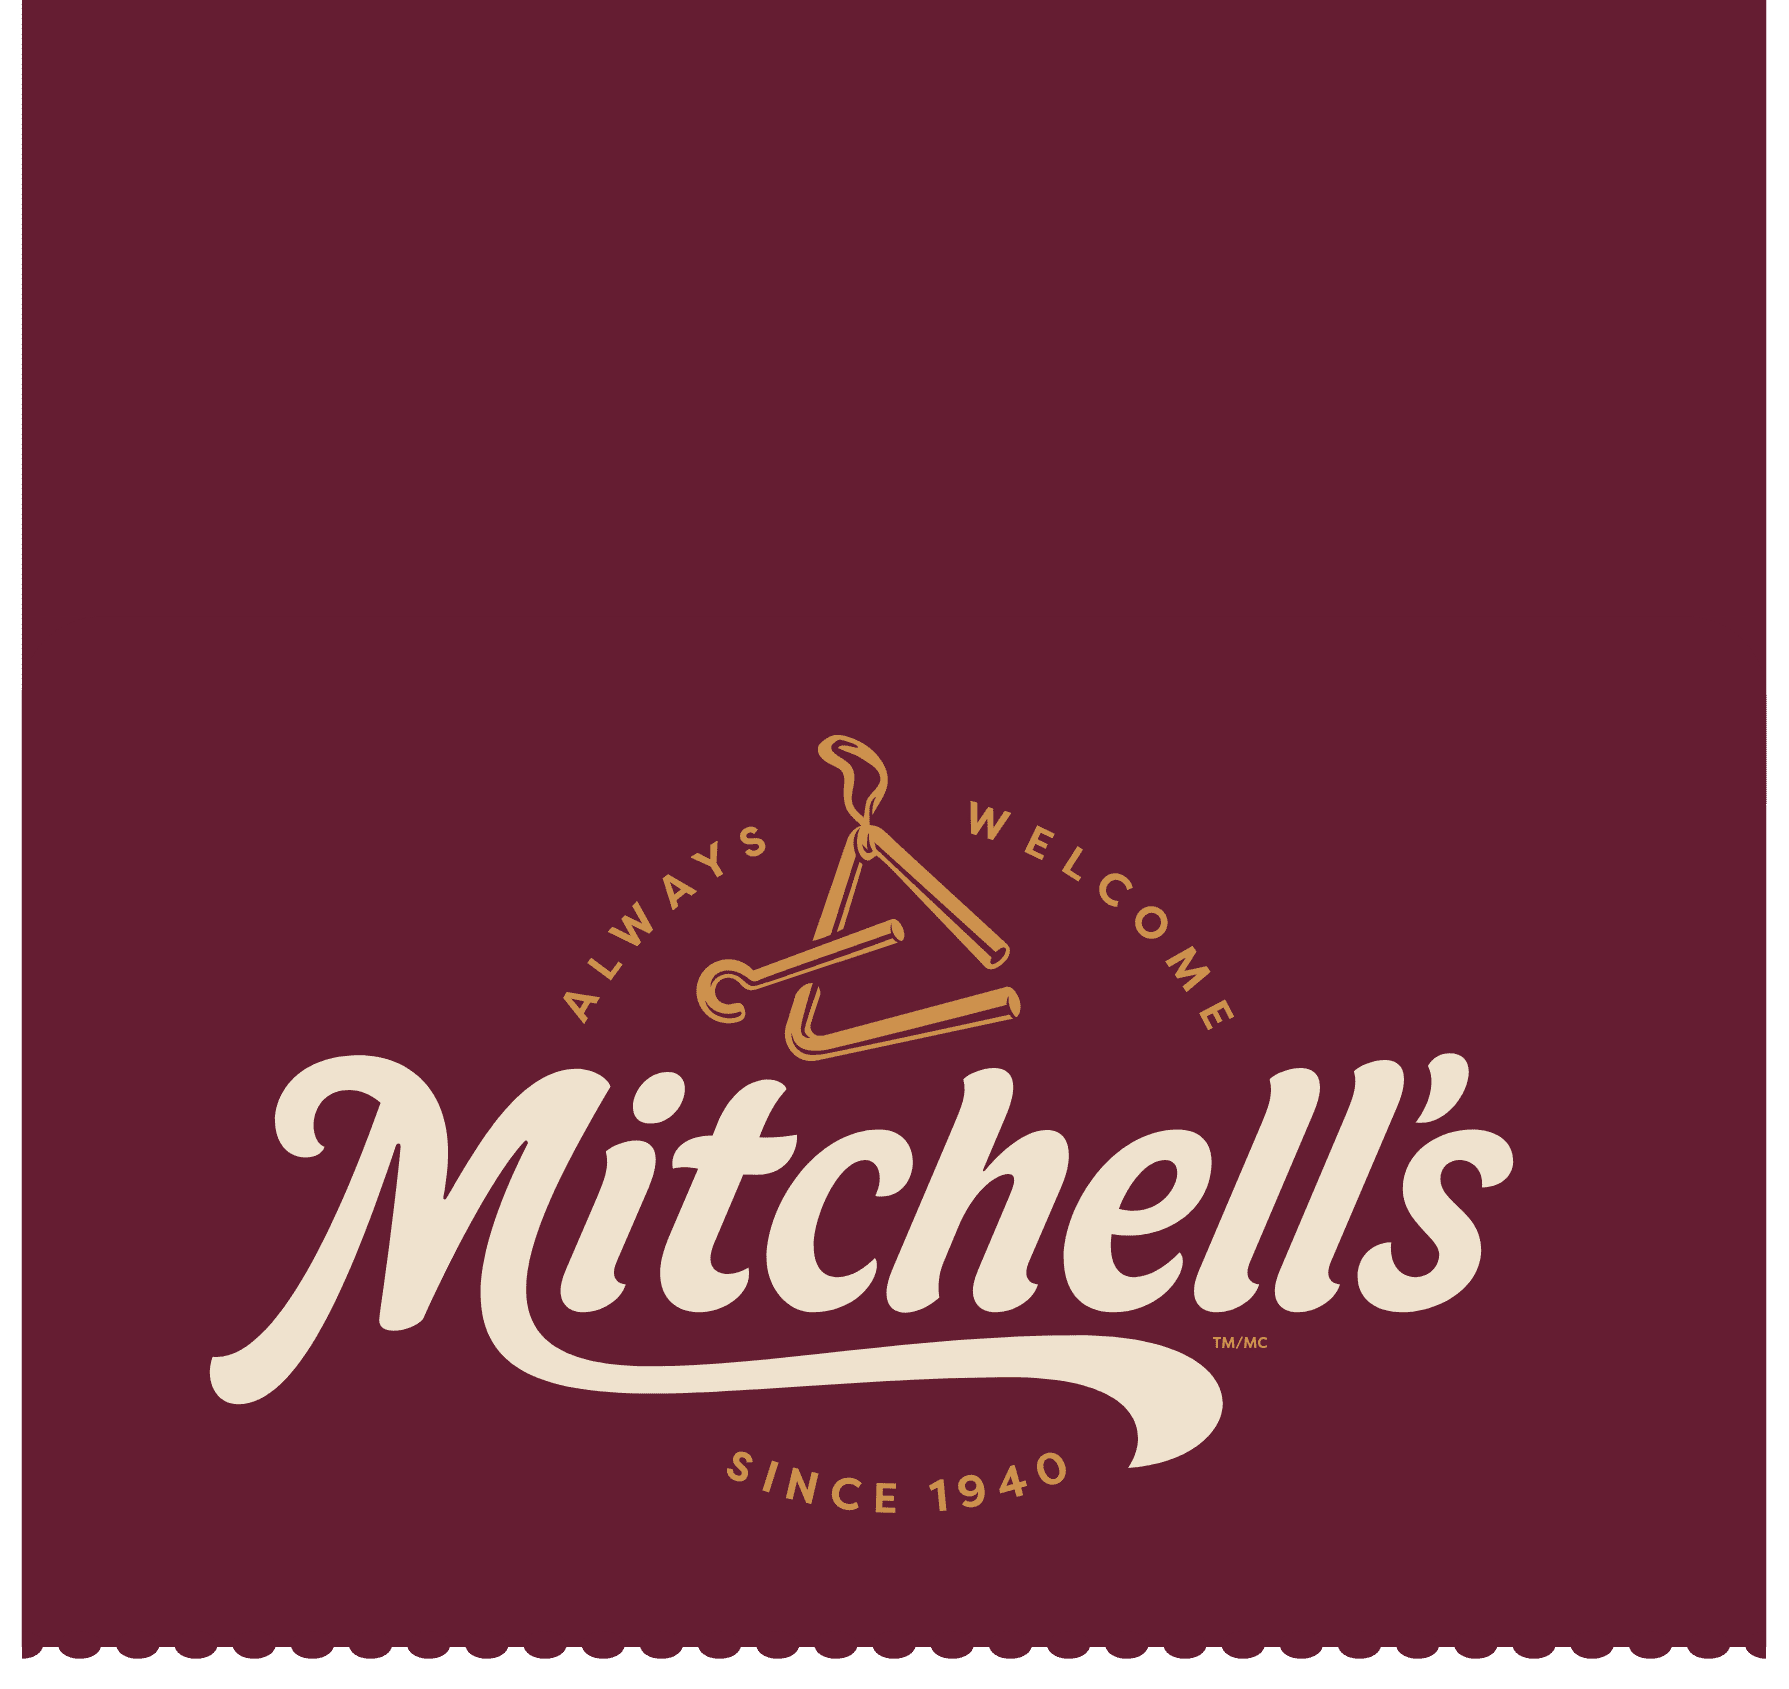 Mitchell's logo